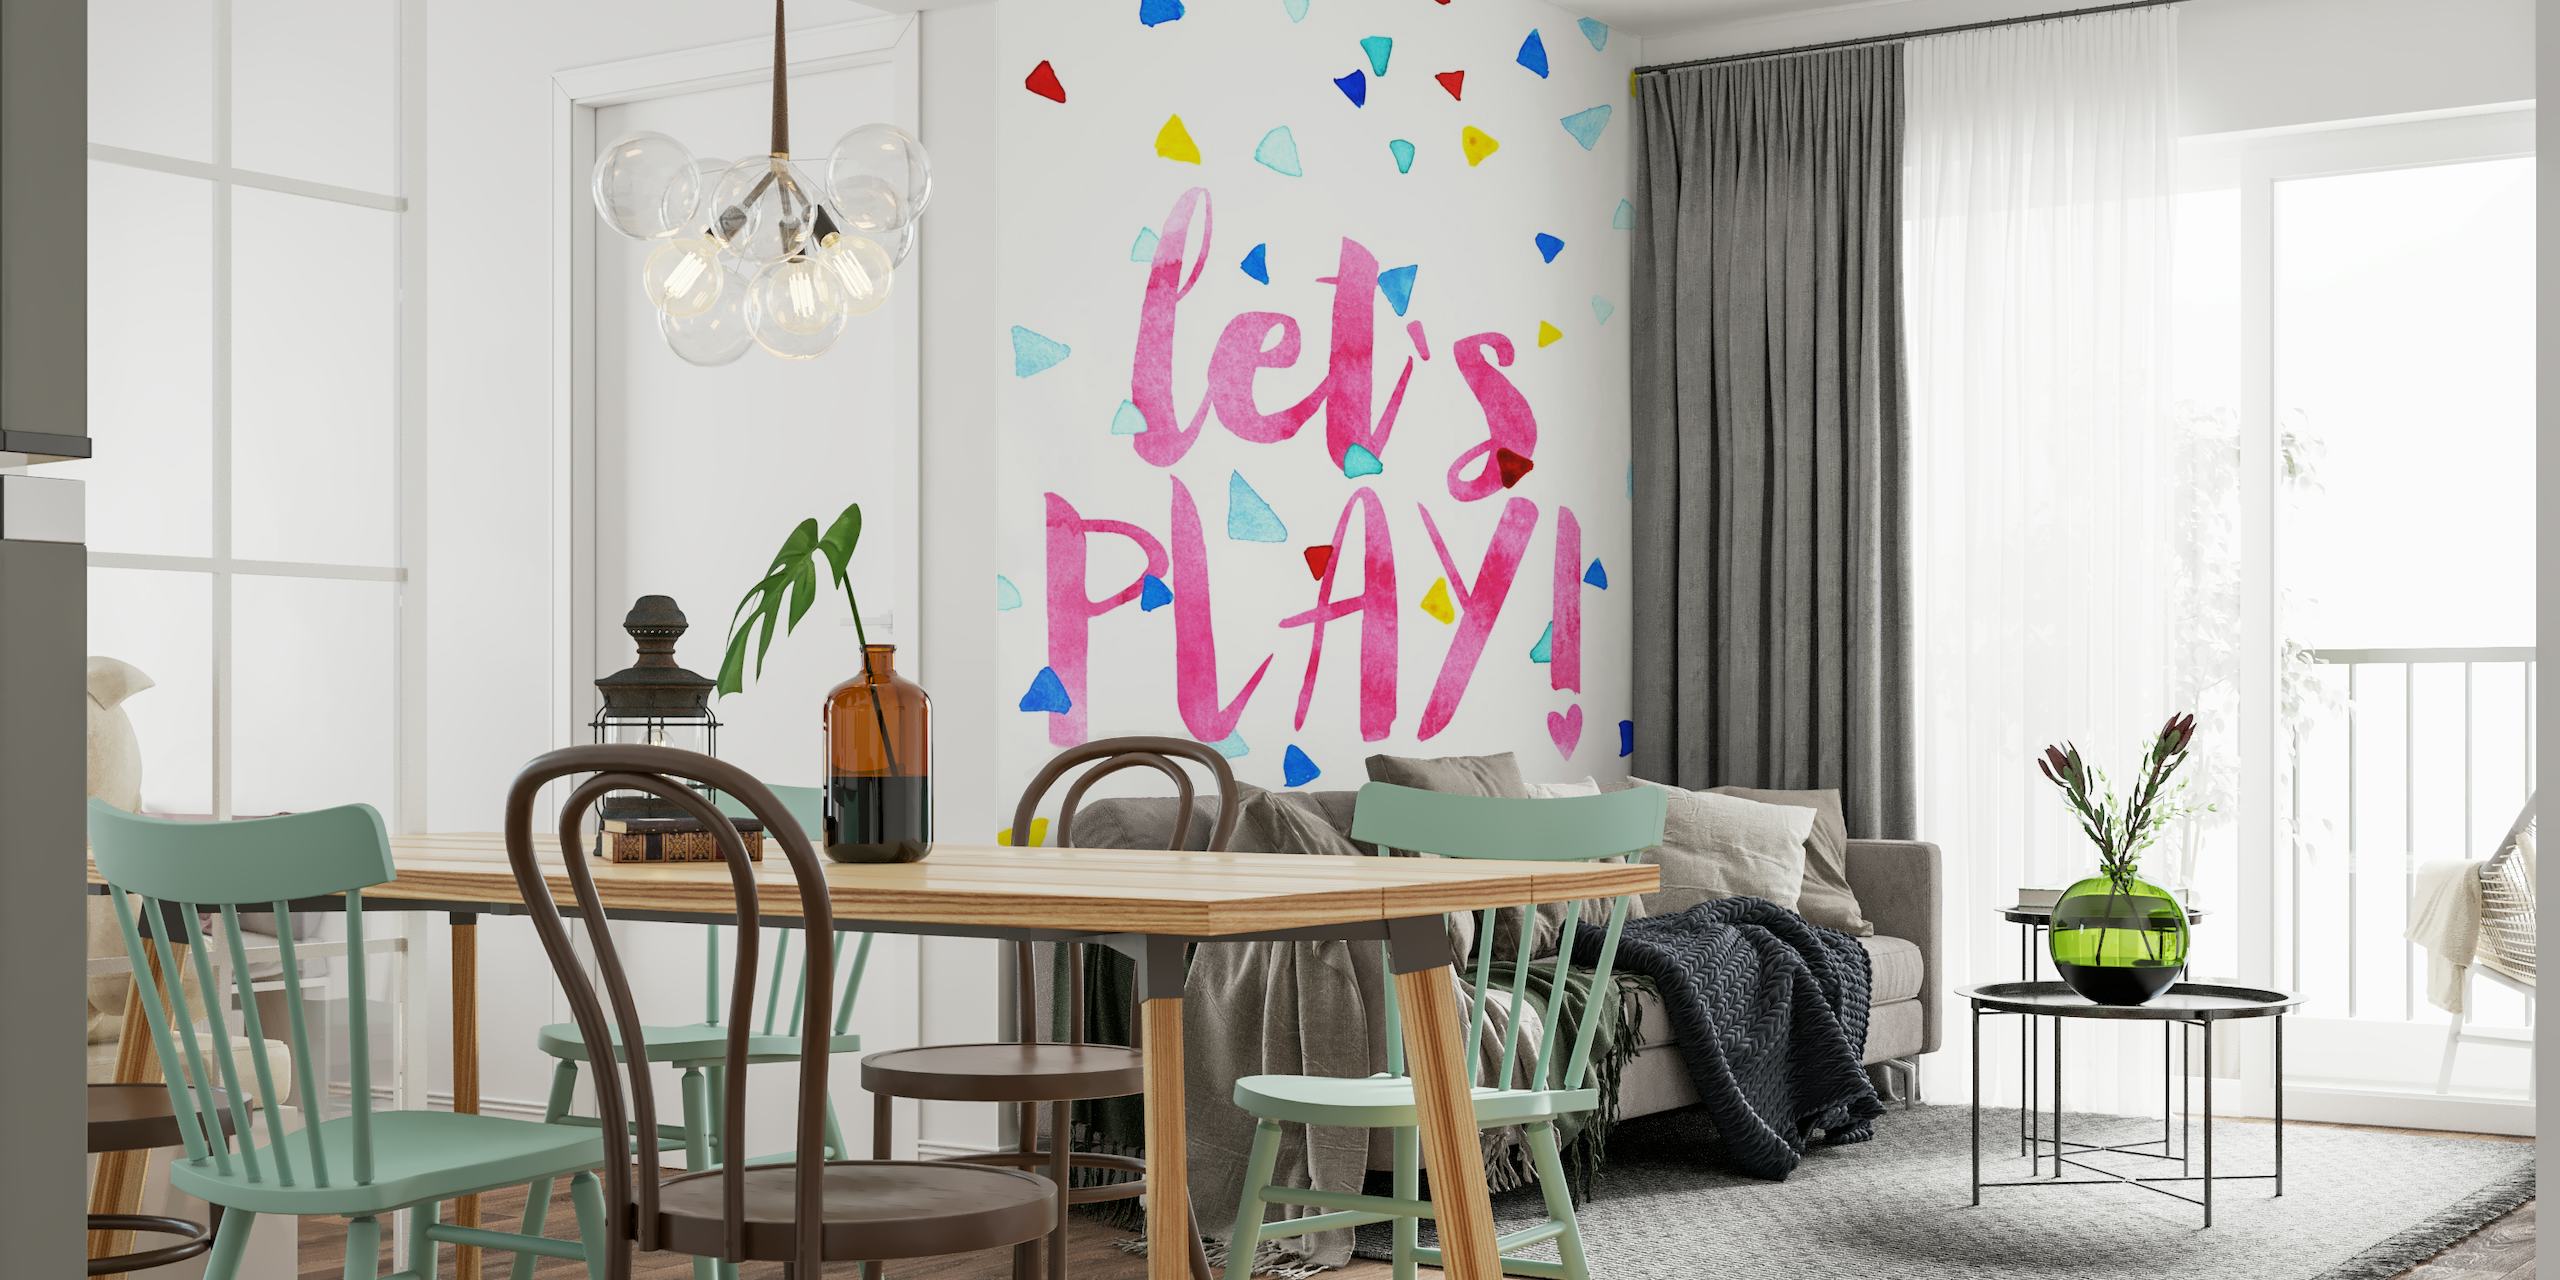 Let`s Play! papel pintado